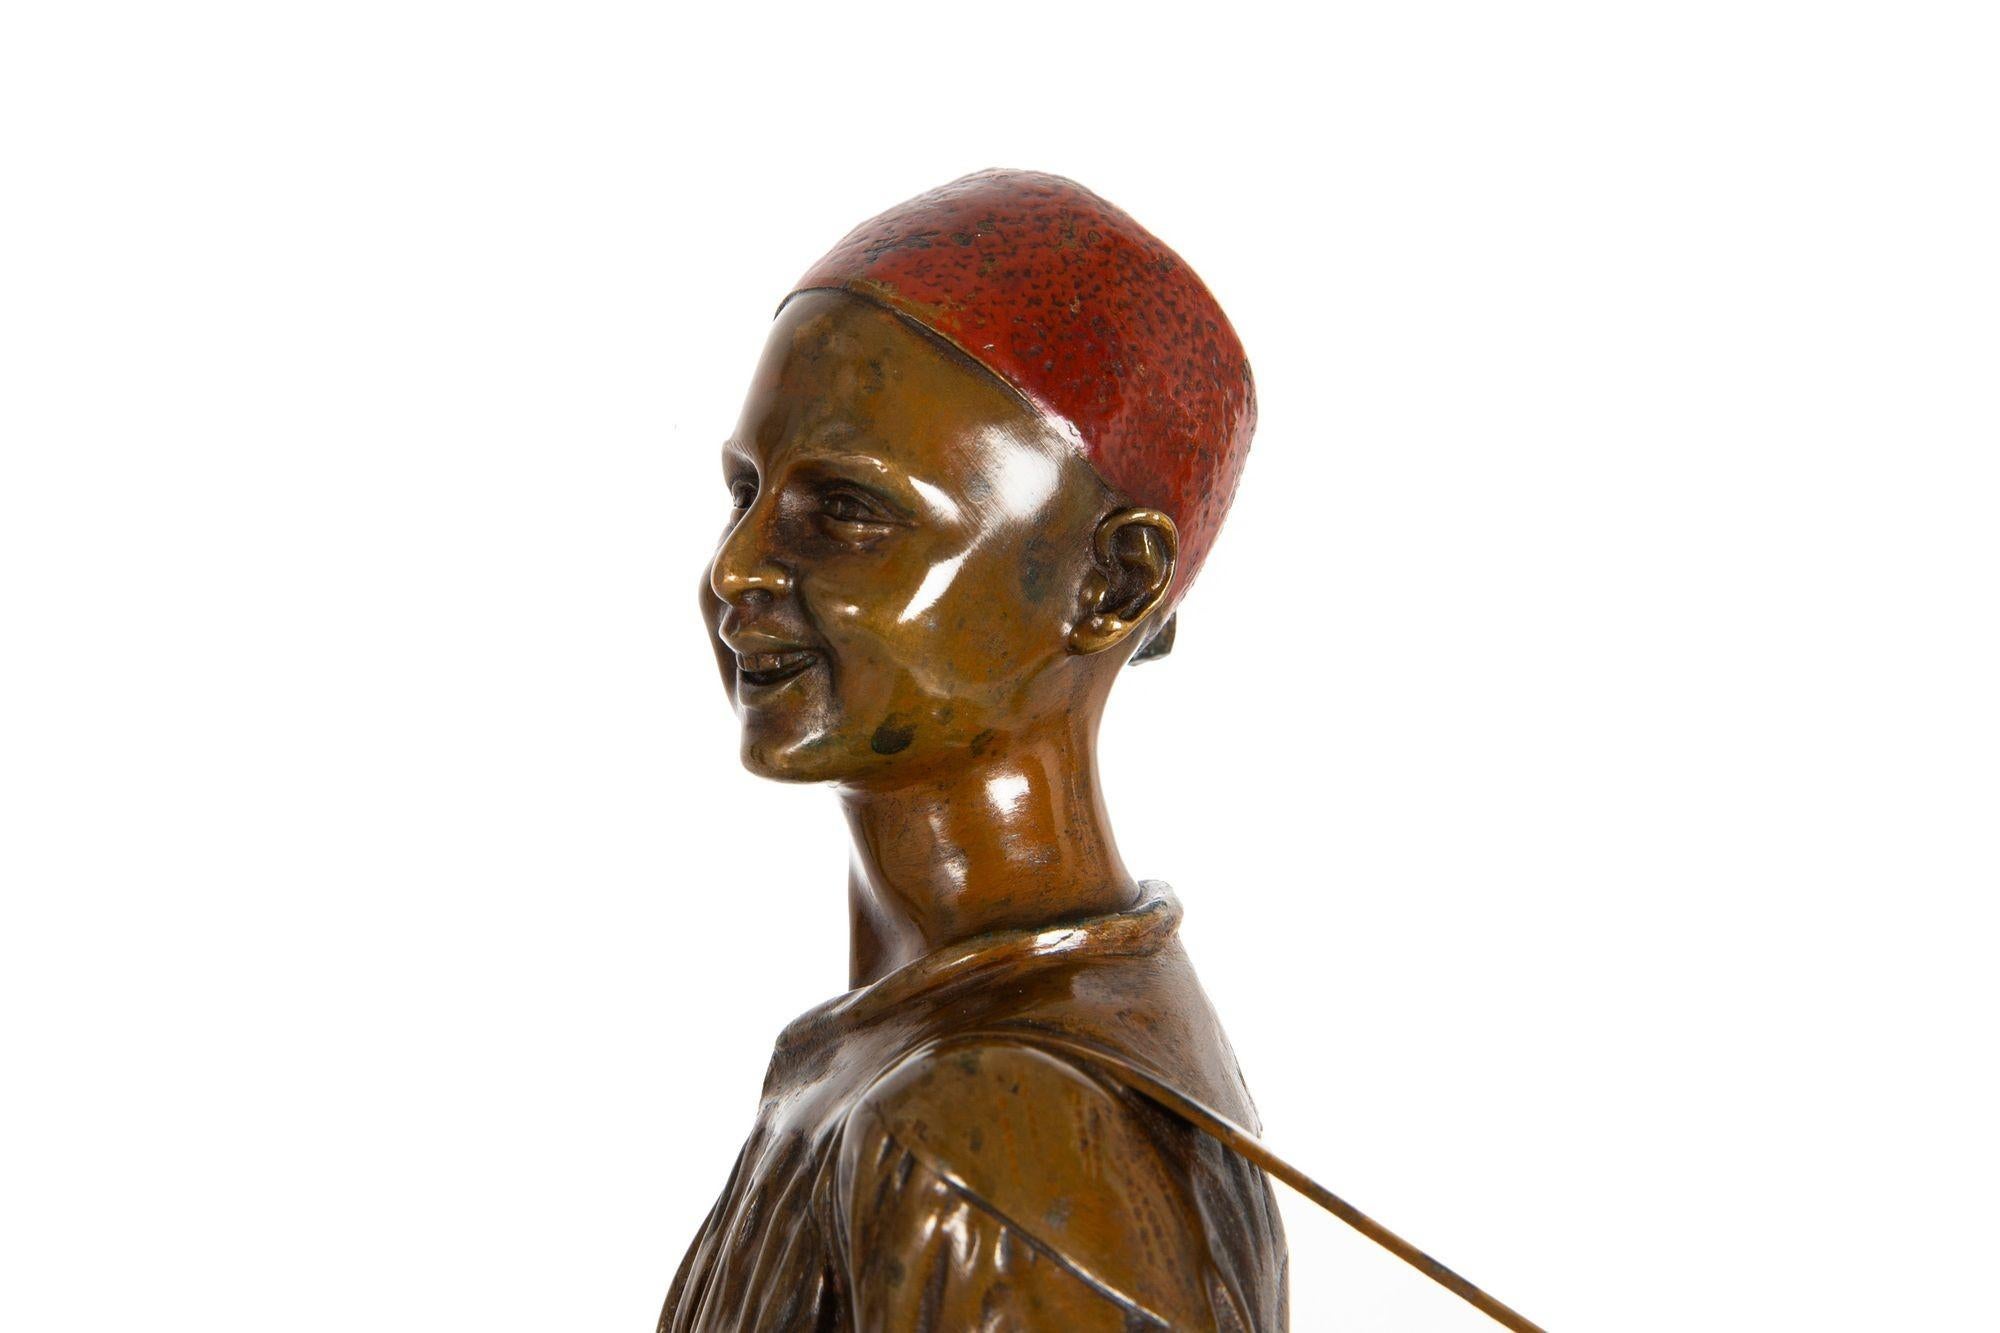 French Orientalist Bronze Sculpture “Arab Shoeshine” after Edouard Drouot For Sale 7